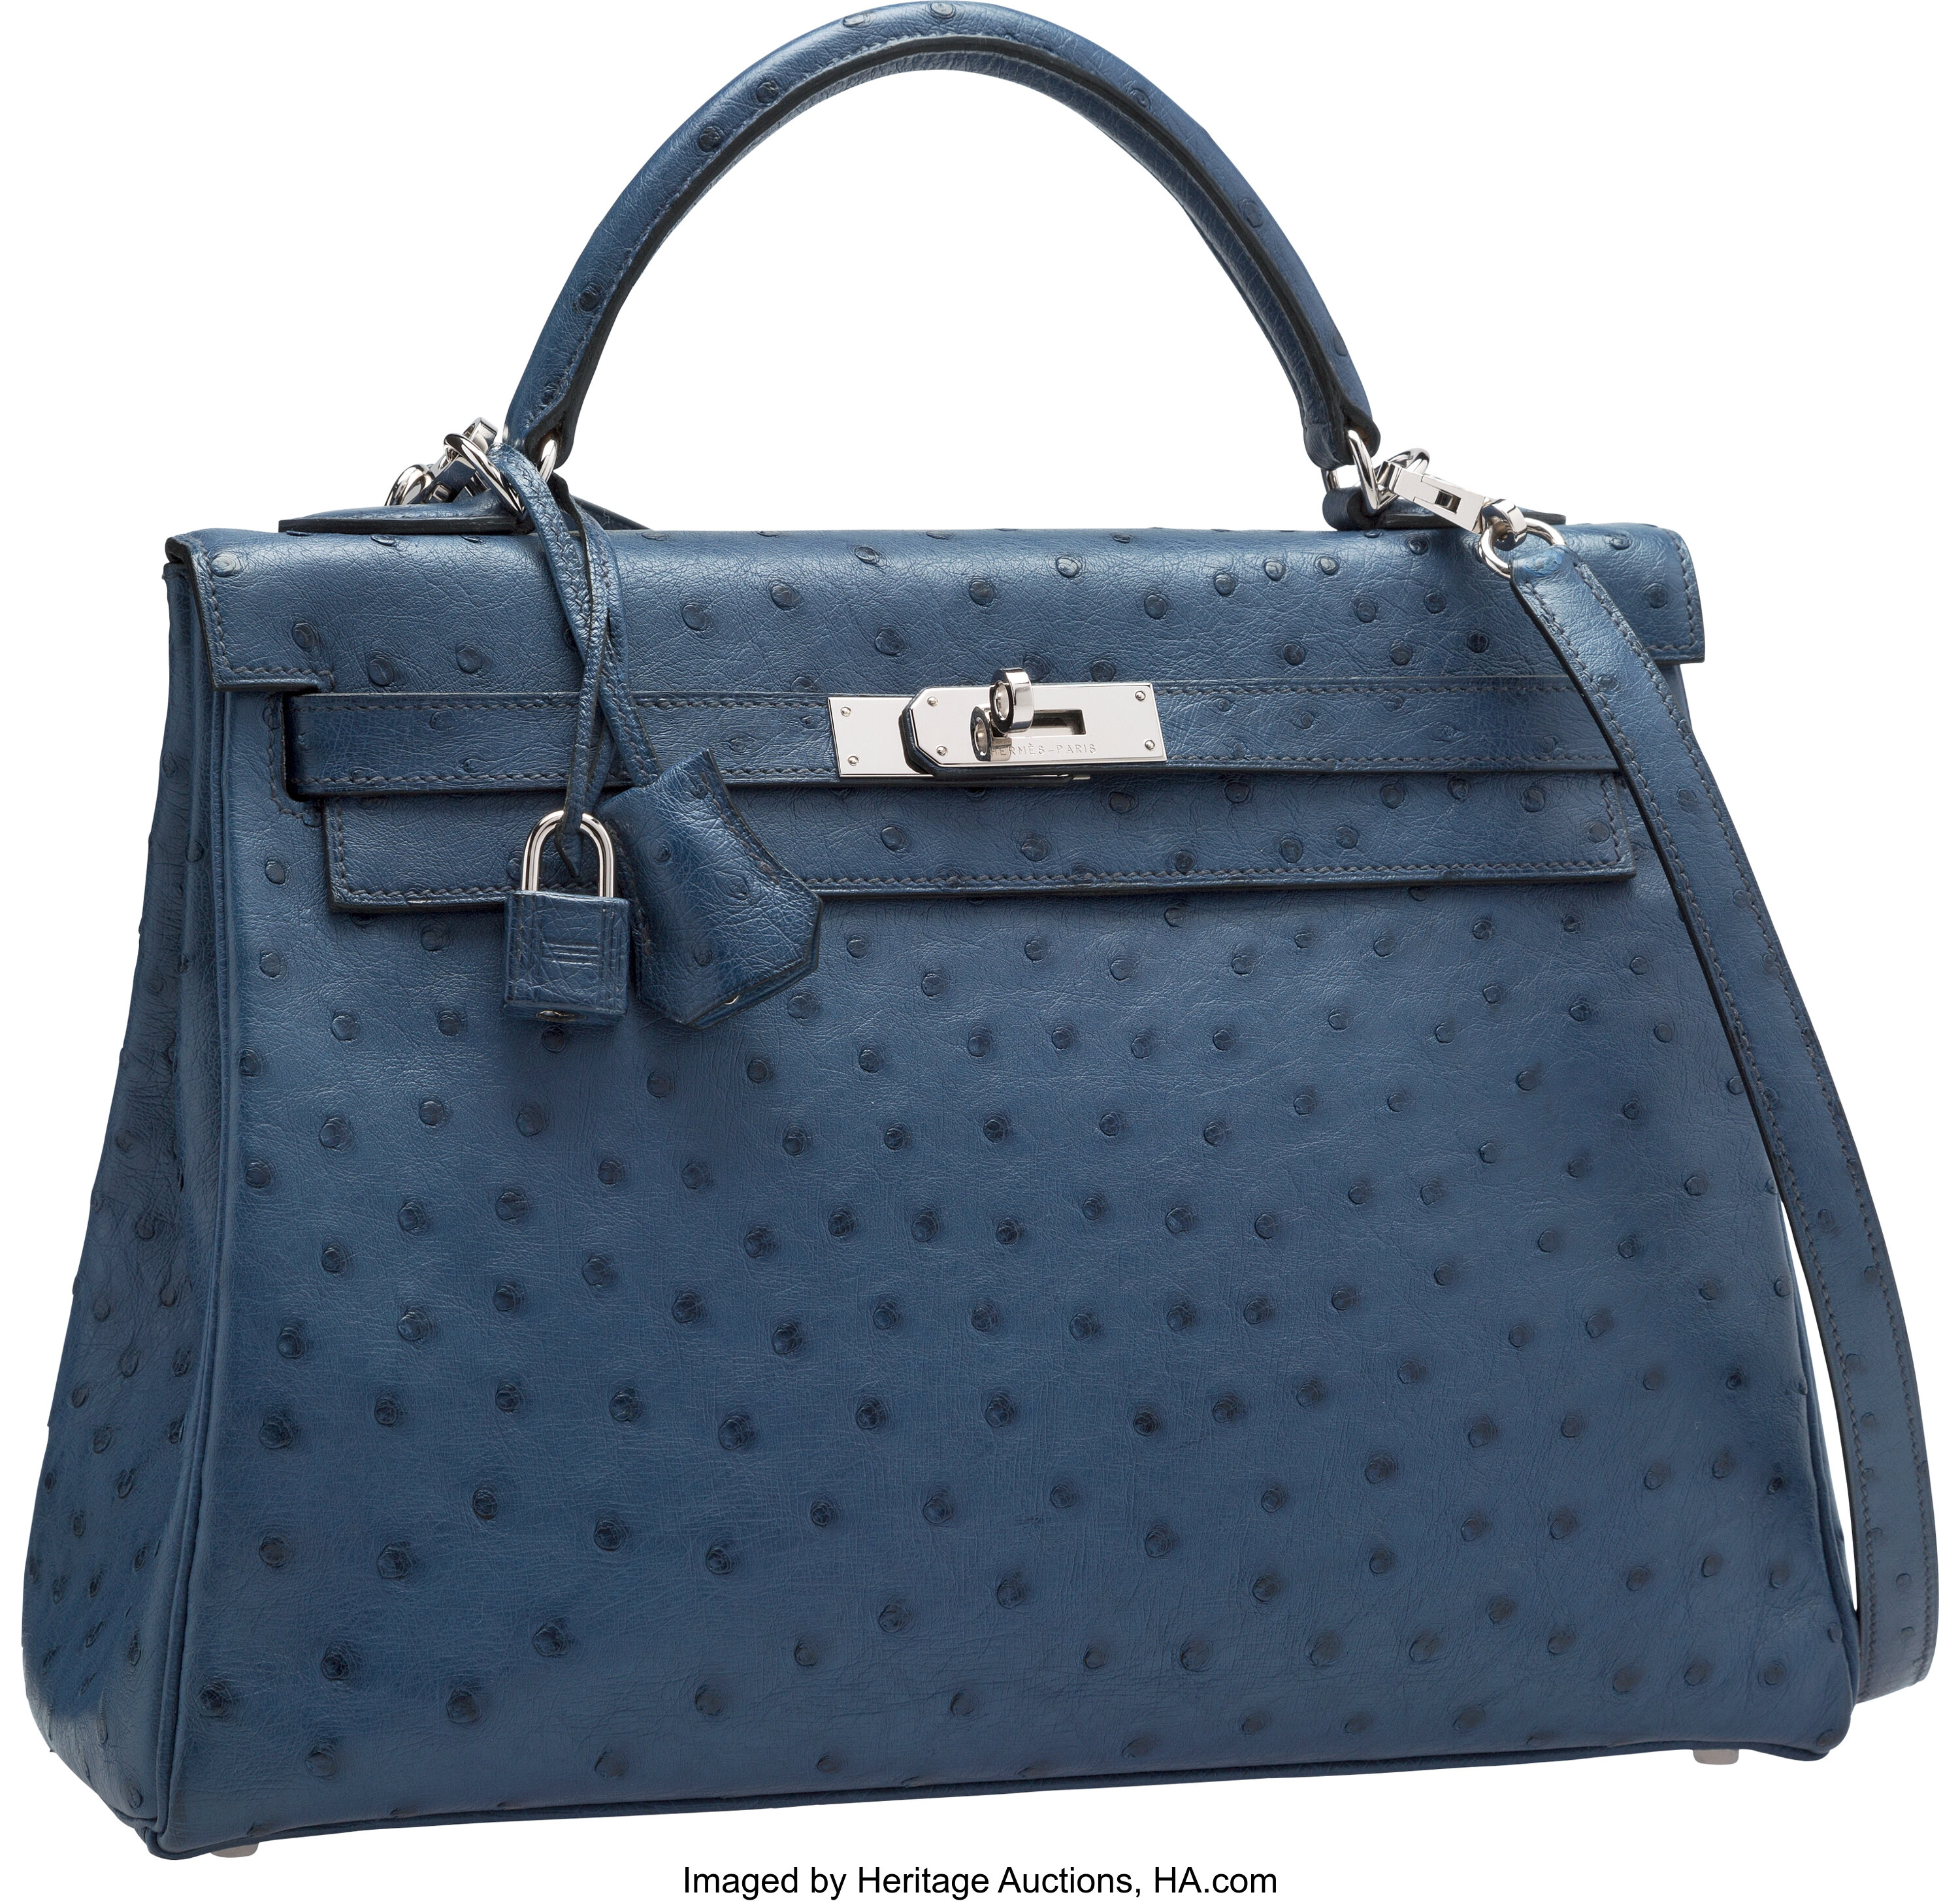 Hermes Kelly 32 blue ostrich leather bag